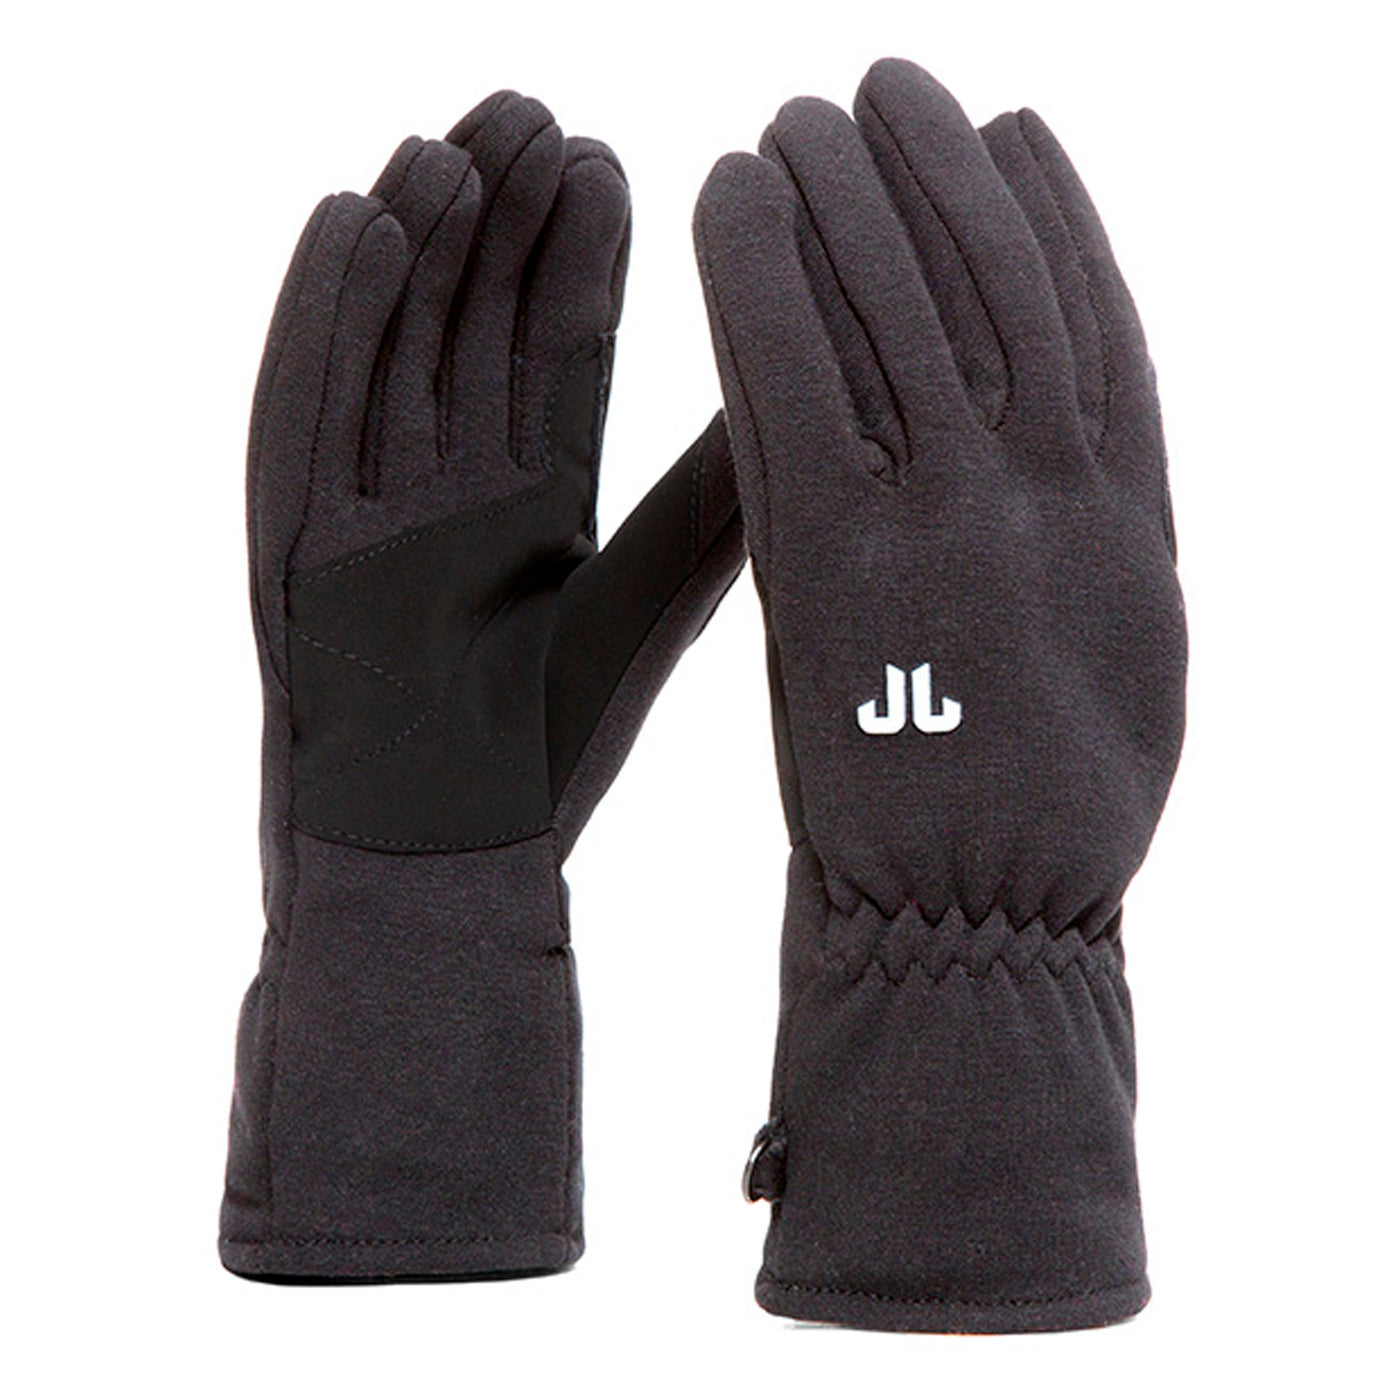 JailJam Stretch Performance Gloves